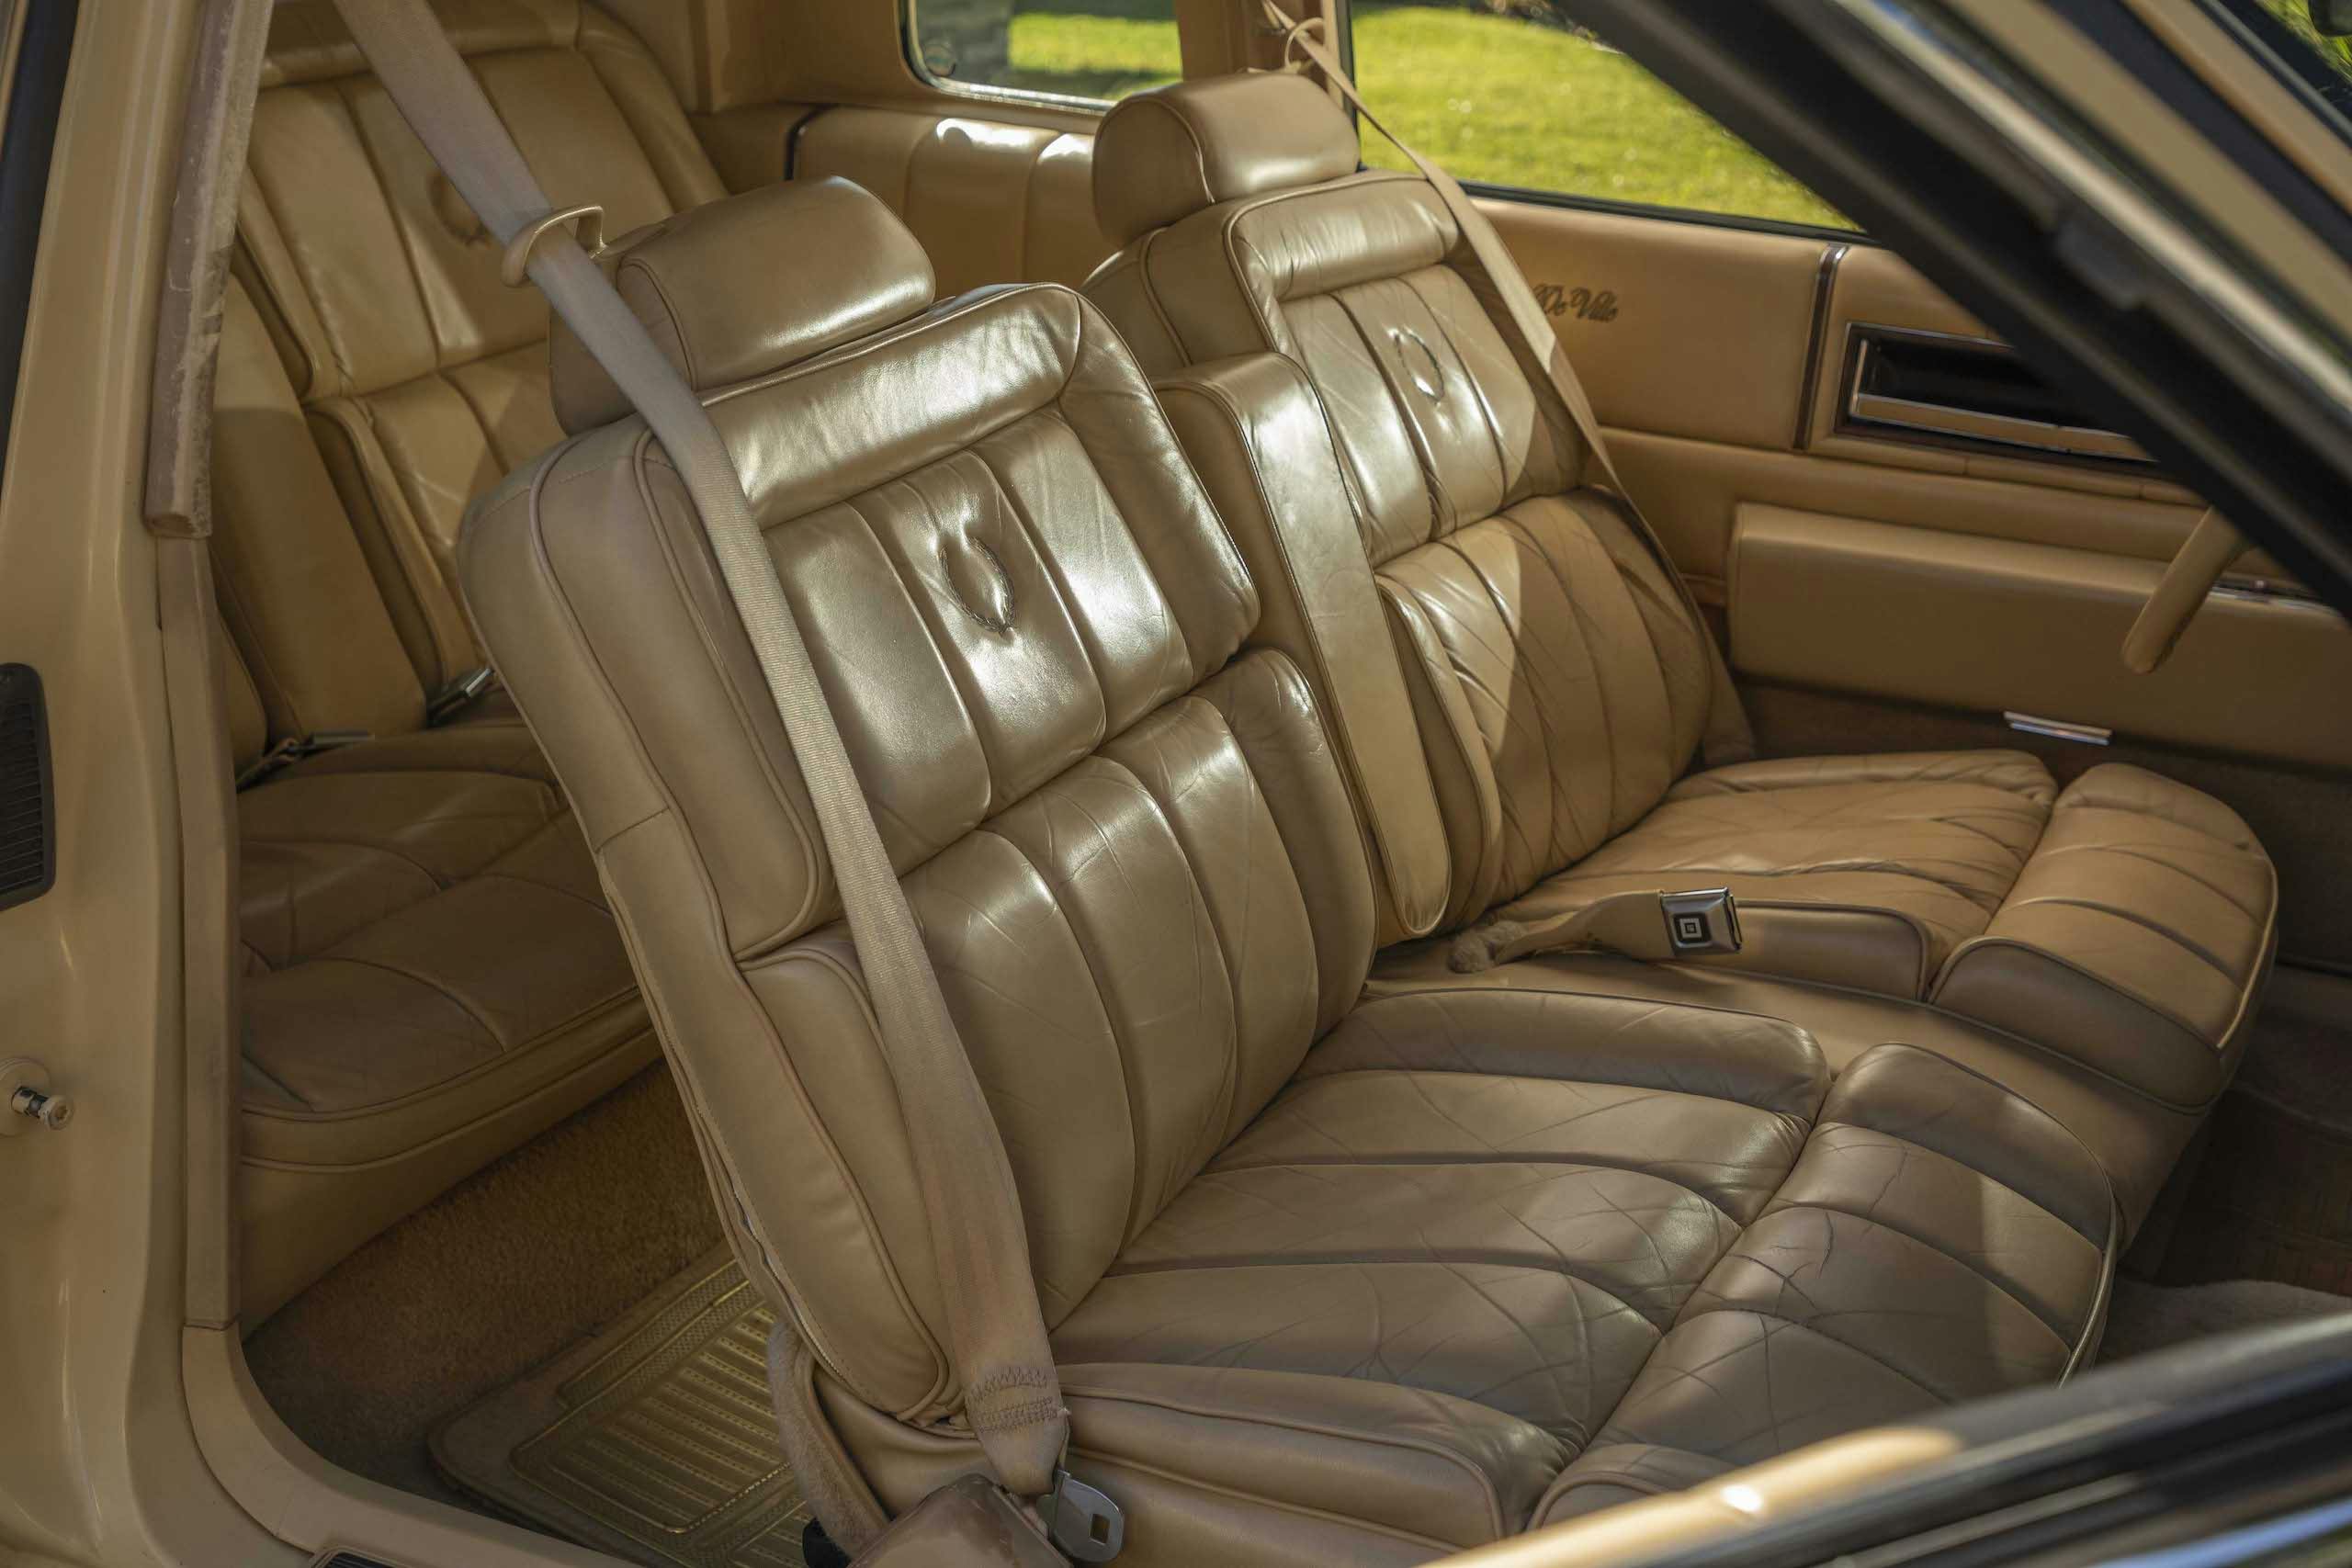 1986 Cadillac Coupe DeVille interior seats